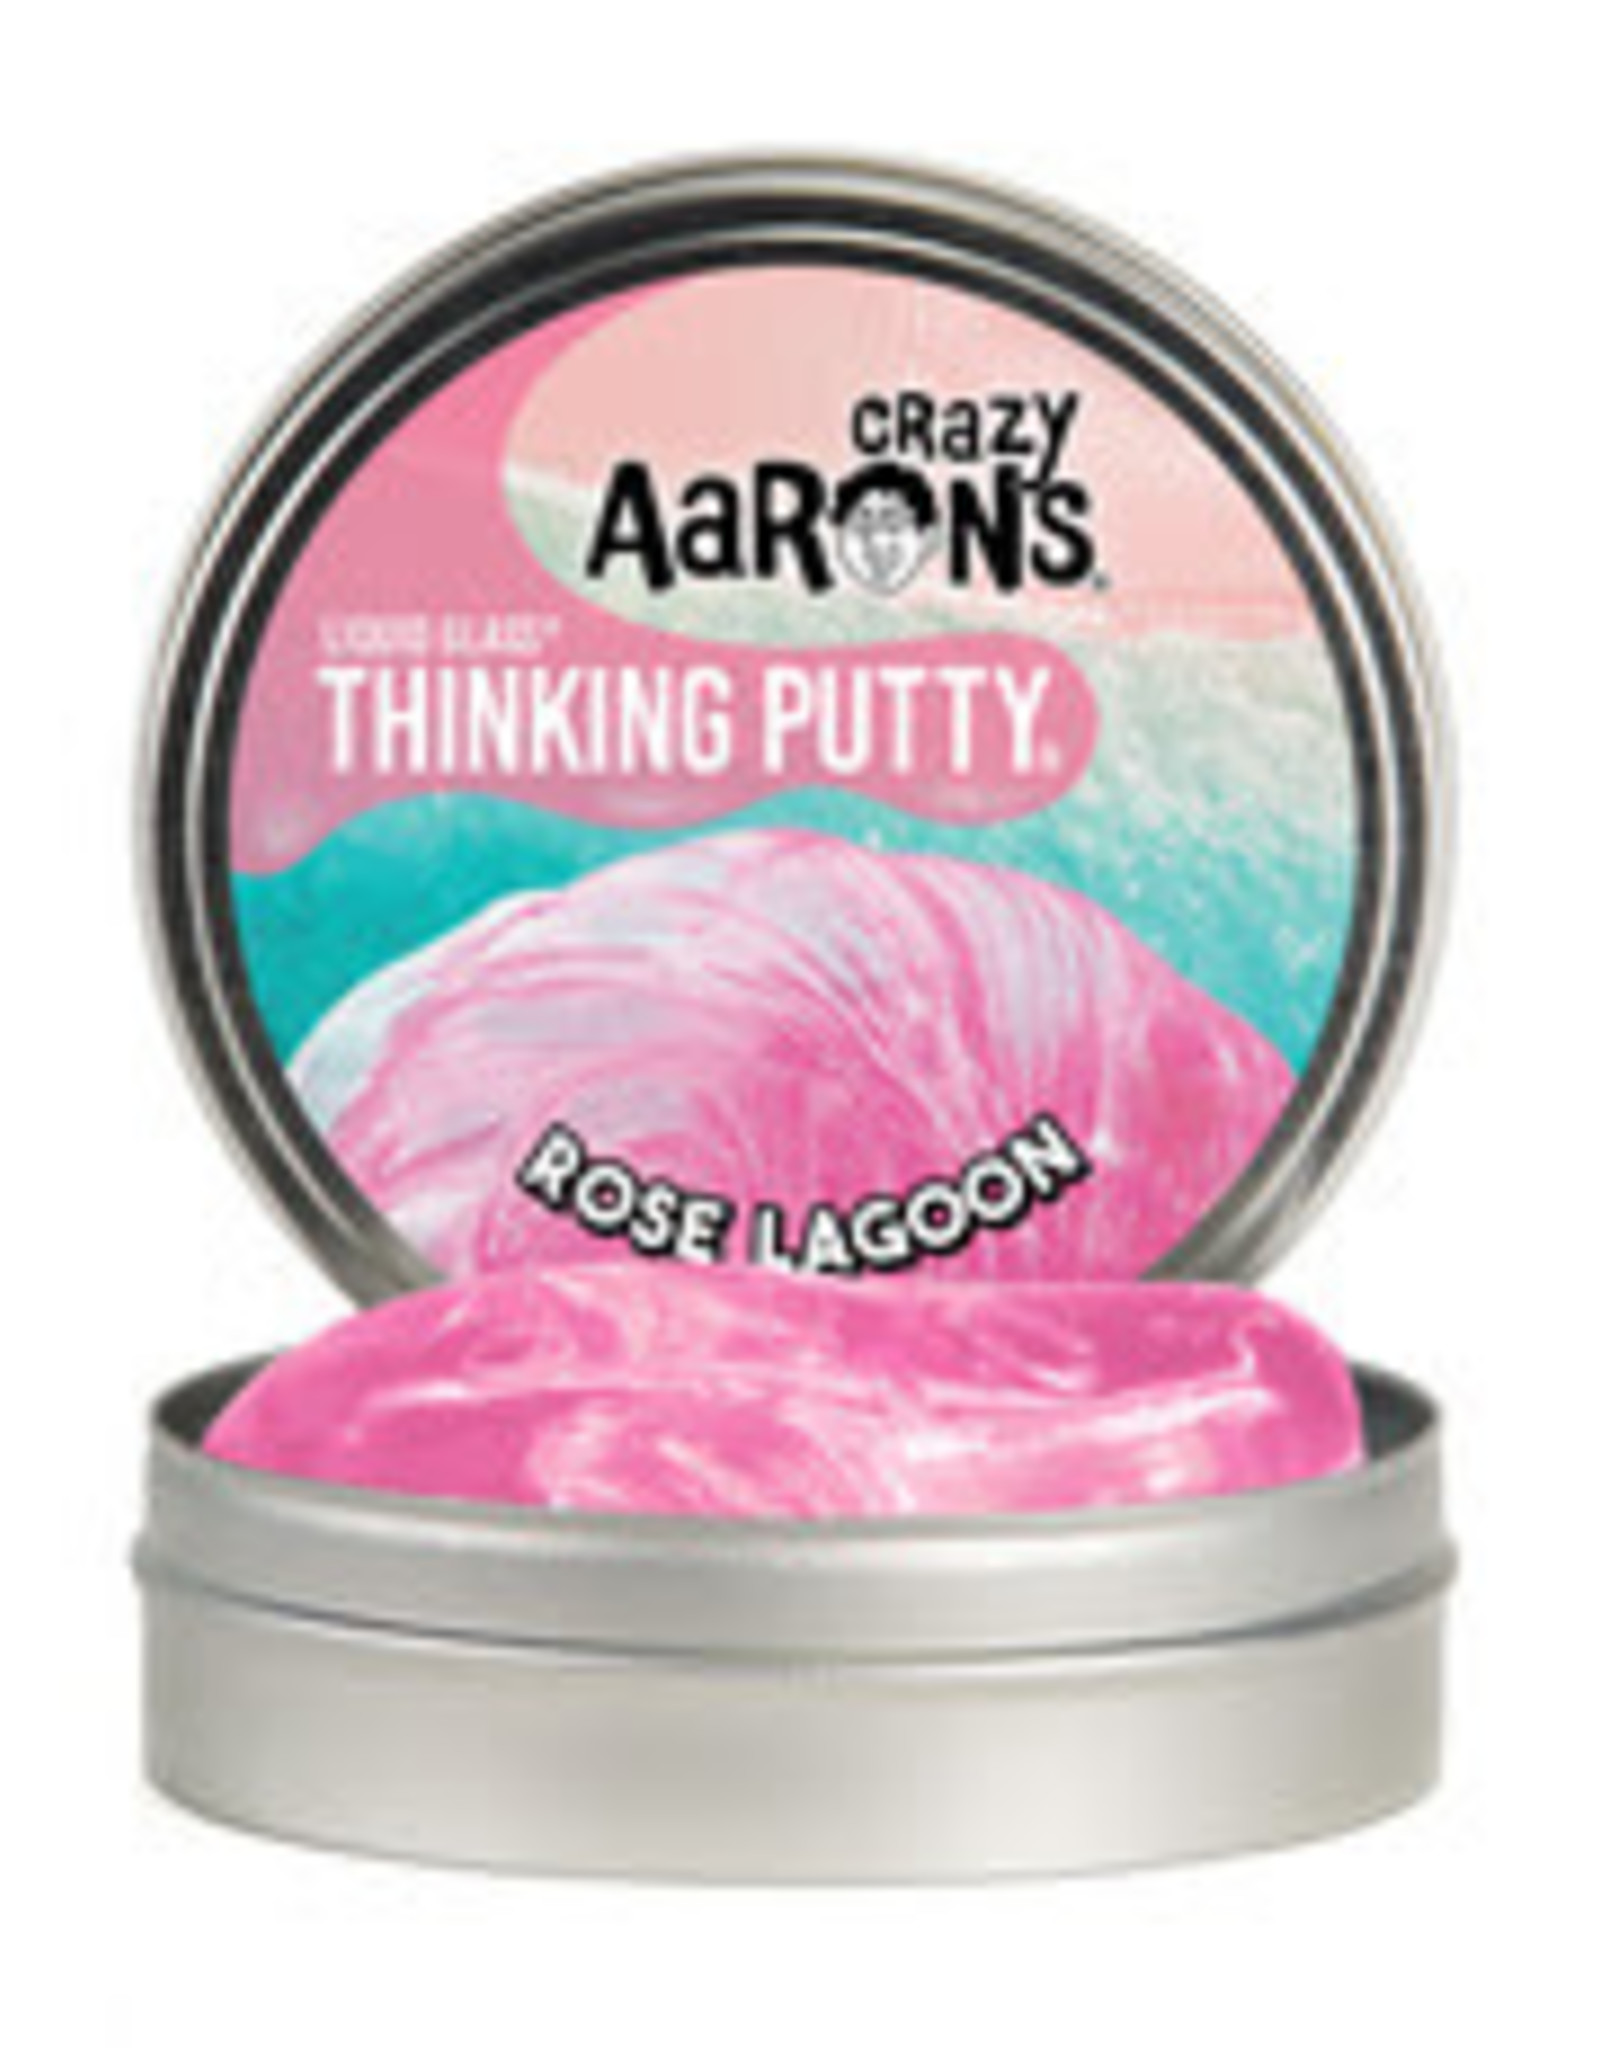 Crazy Aaron's Thinking Putty Crazy Aaron's Liquid Glass 4" Tins